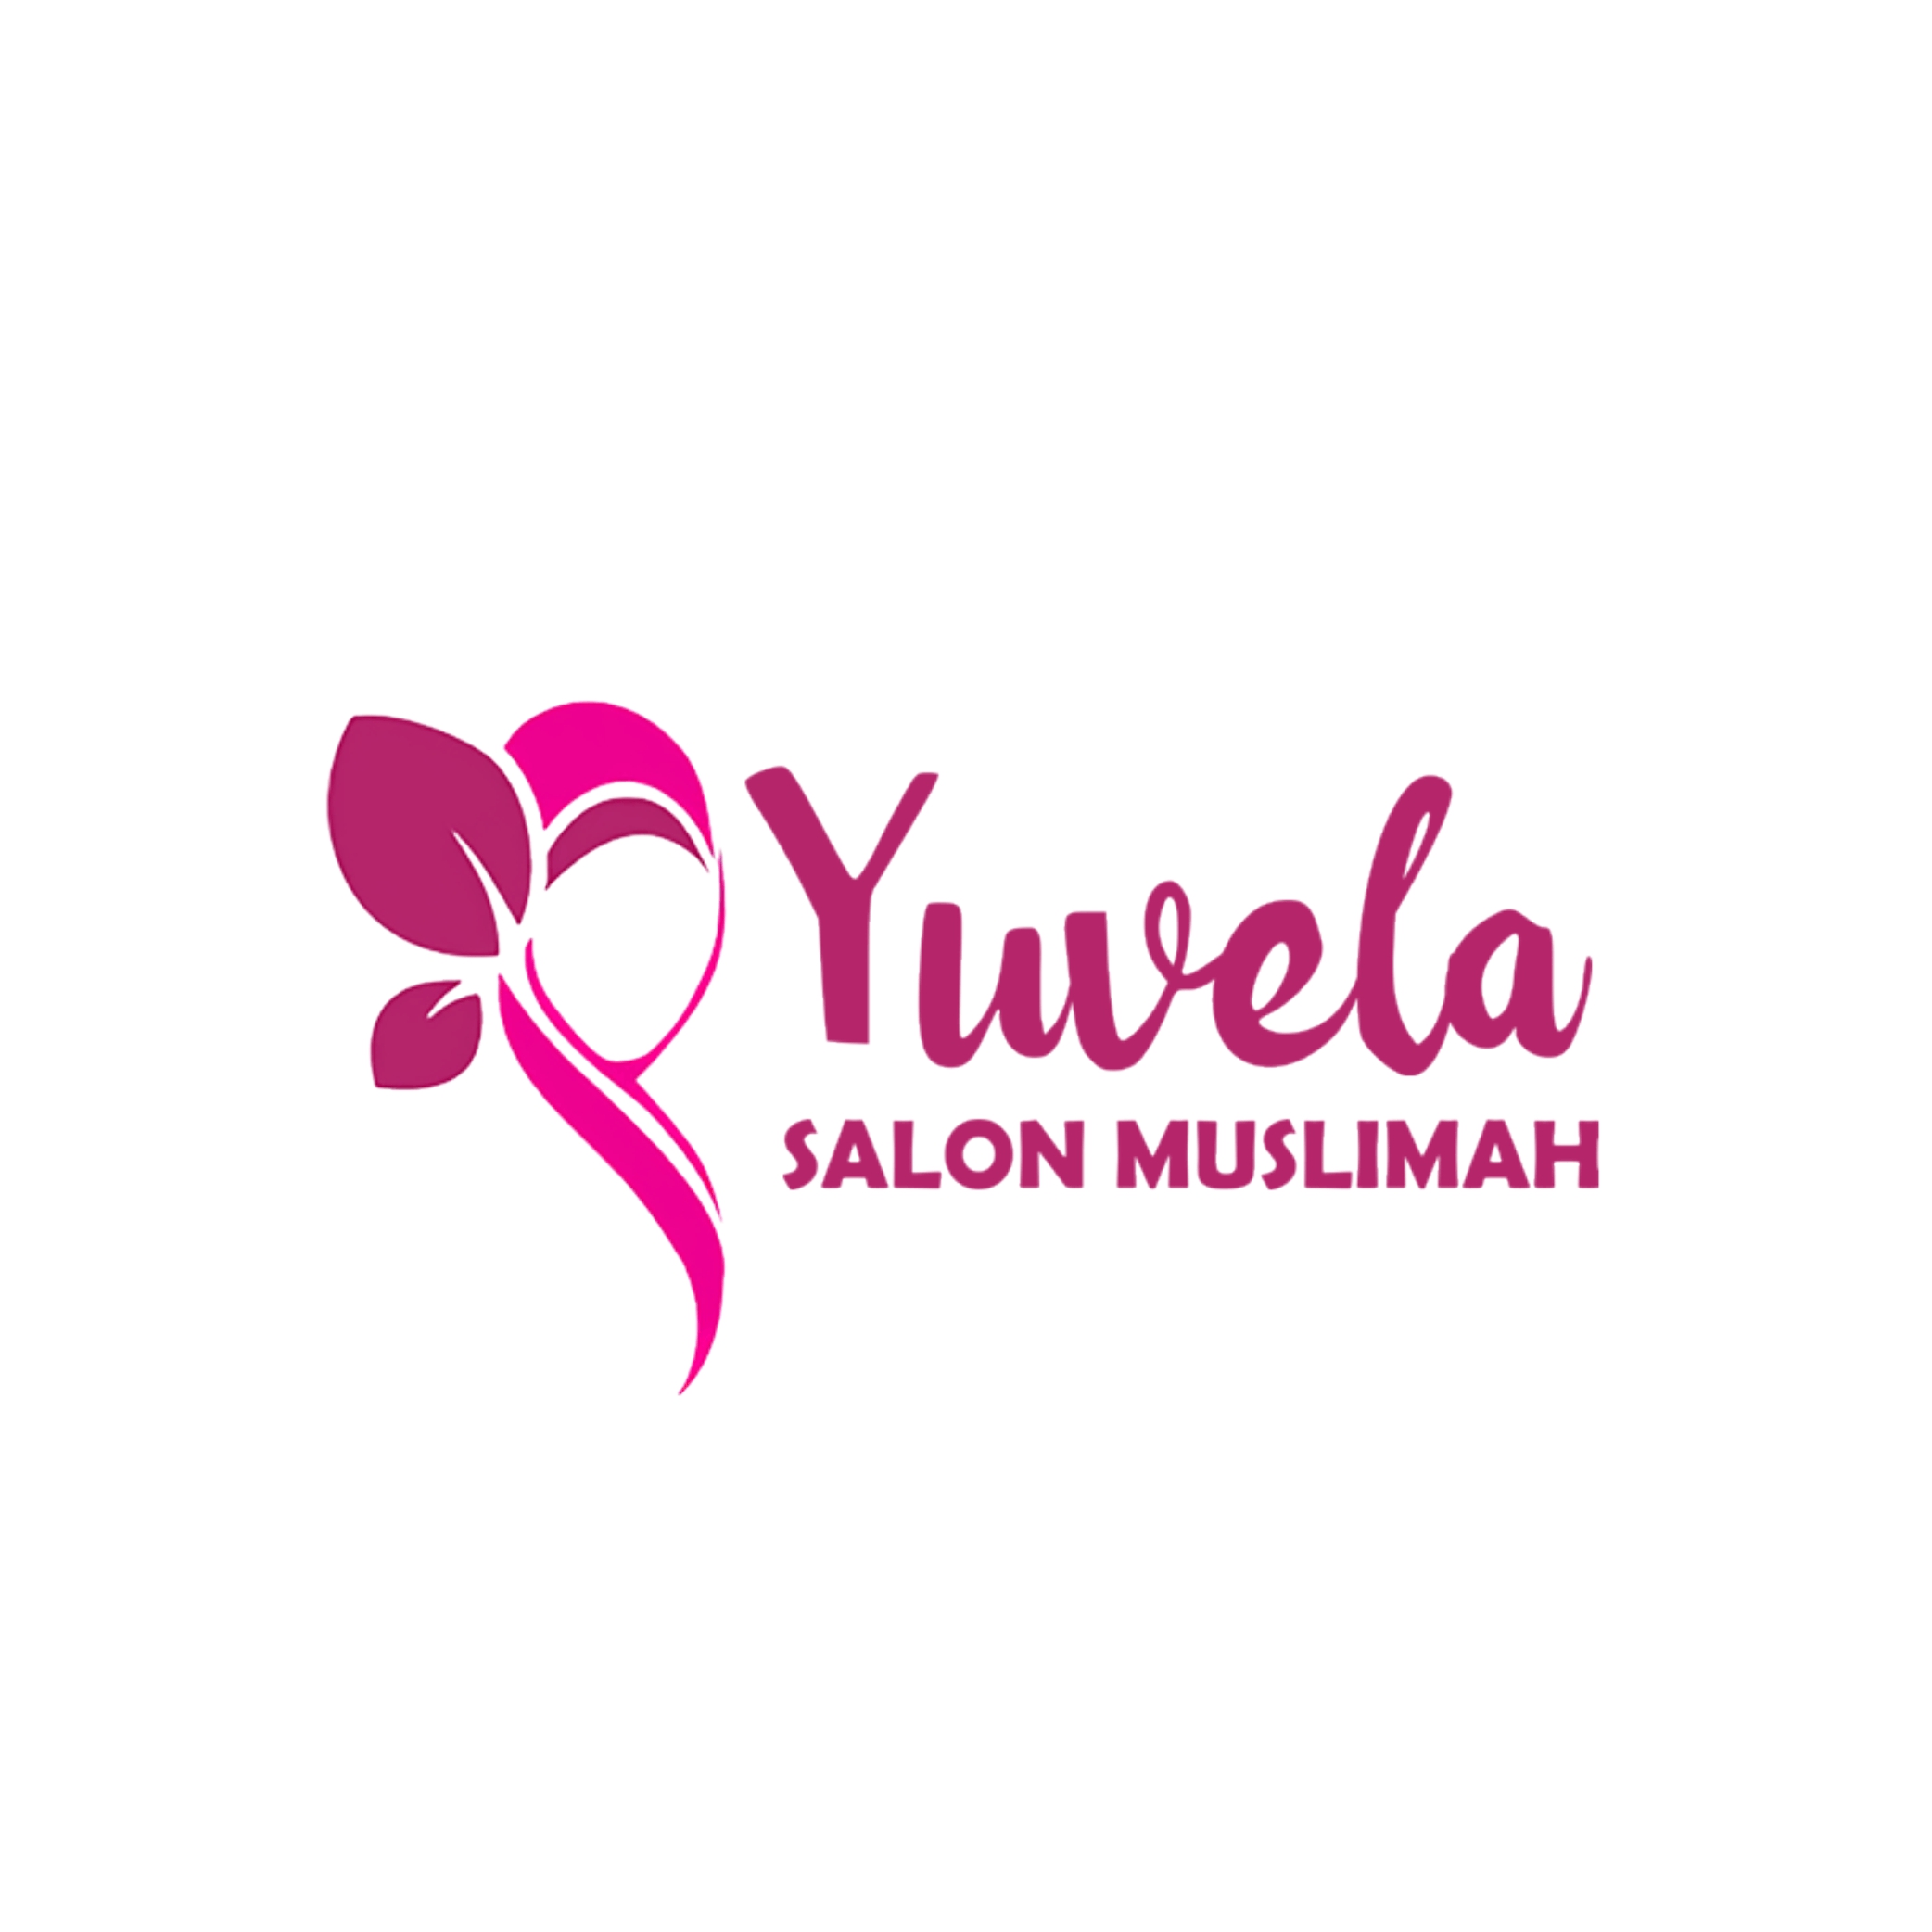 Yuvela Salon Muslimah